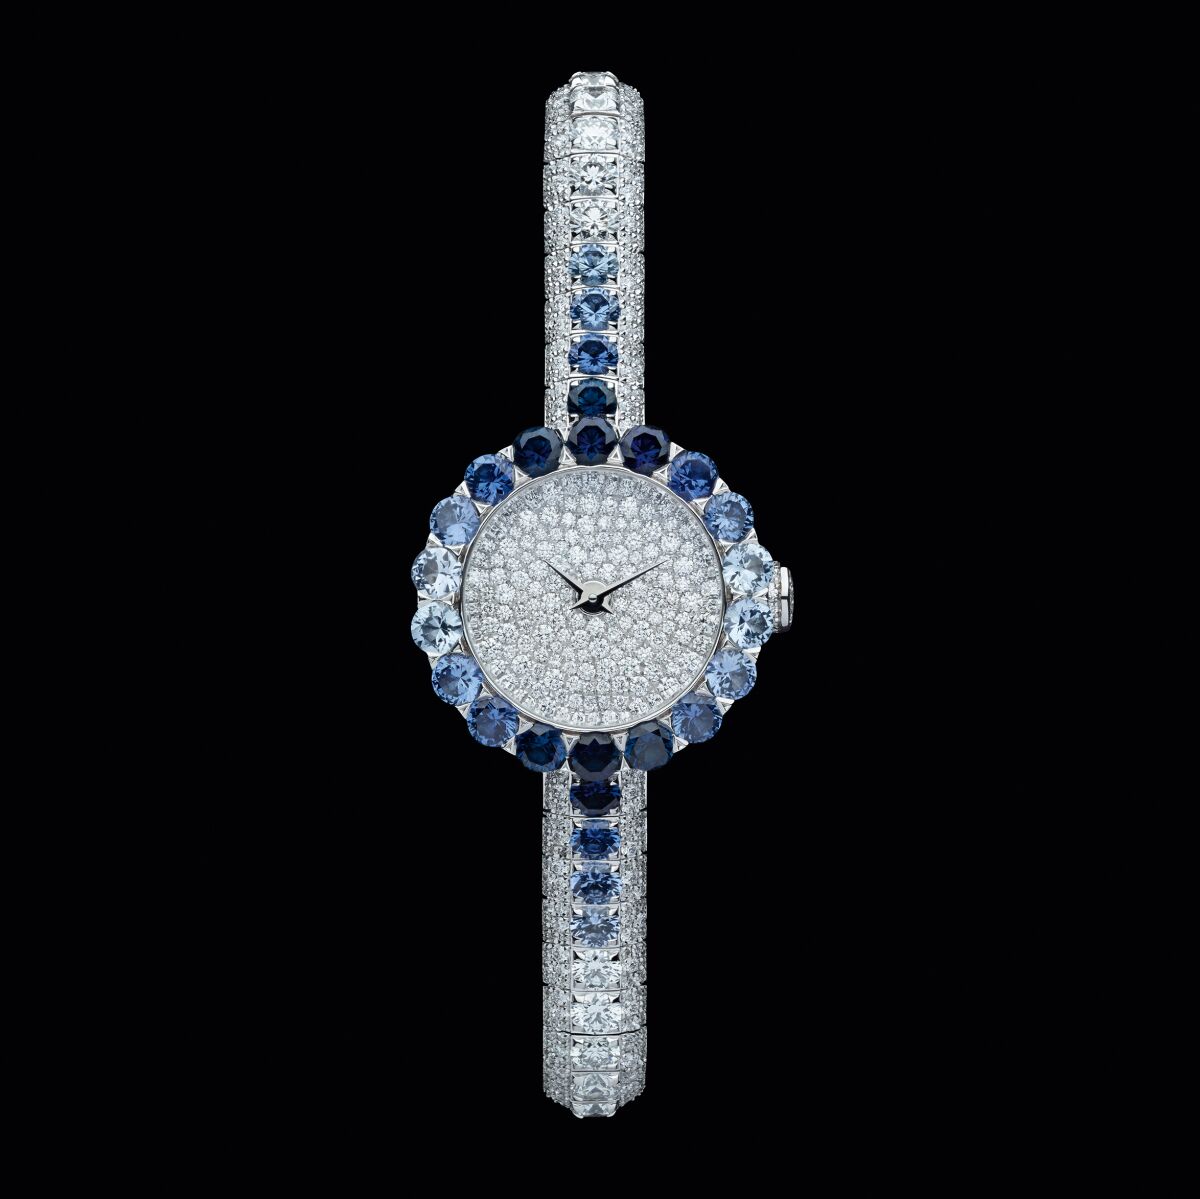 A photo of Dior's La D de Dior Précieuse 21mm quartz timepiece.